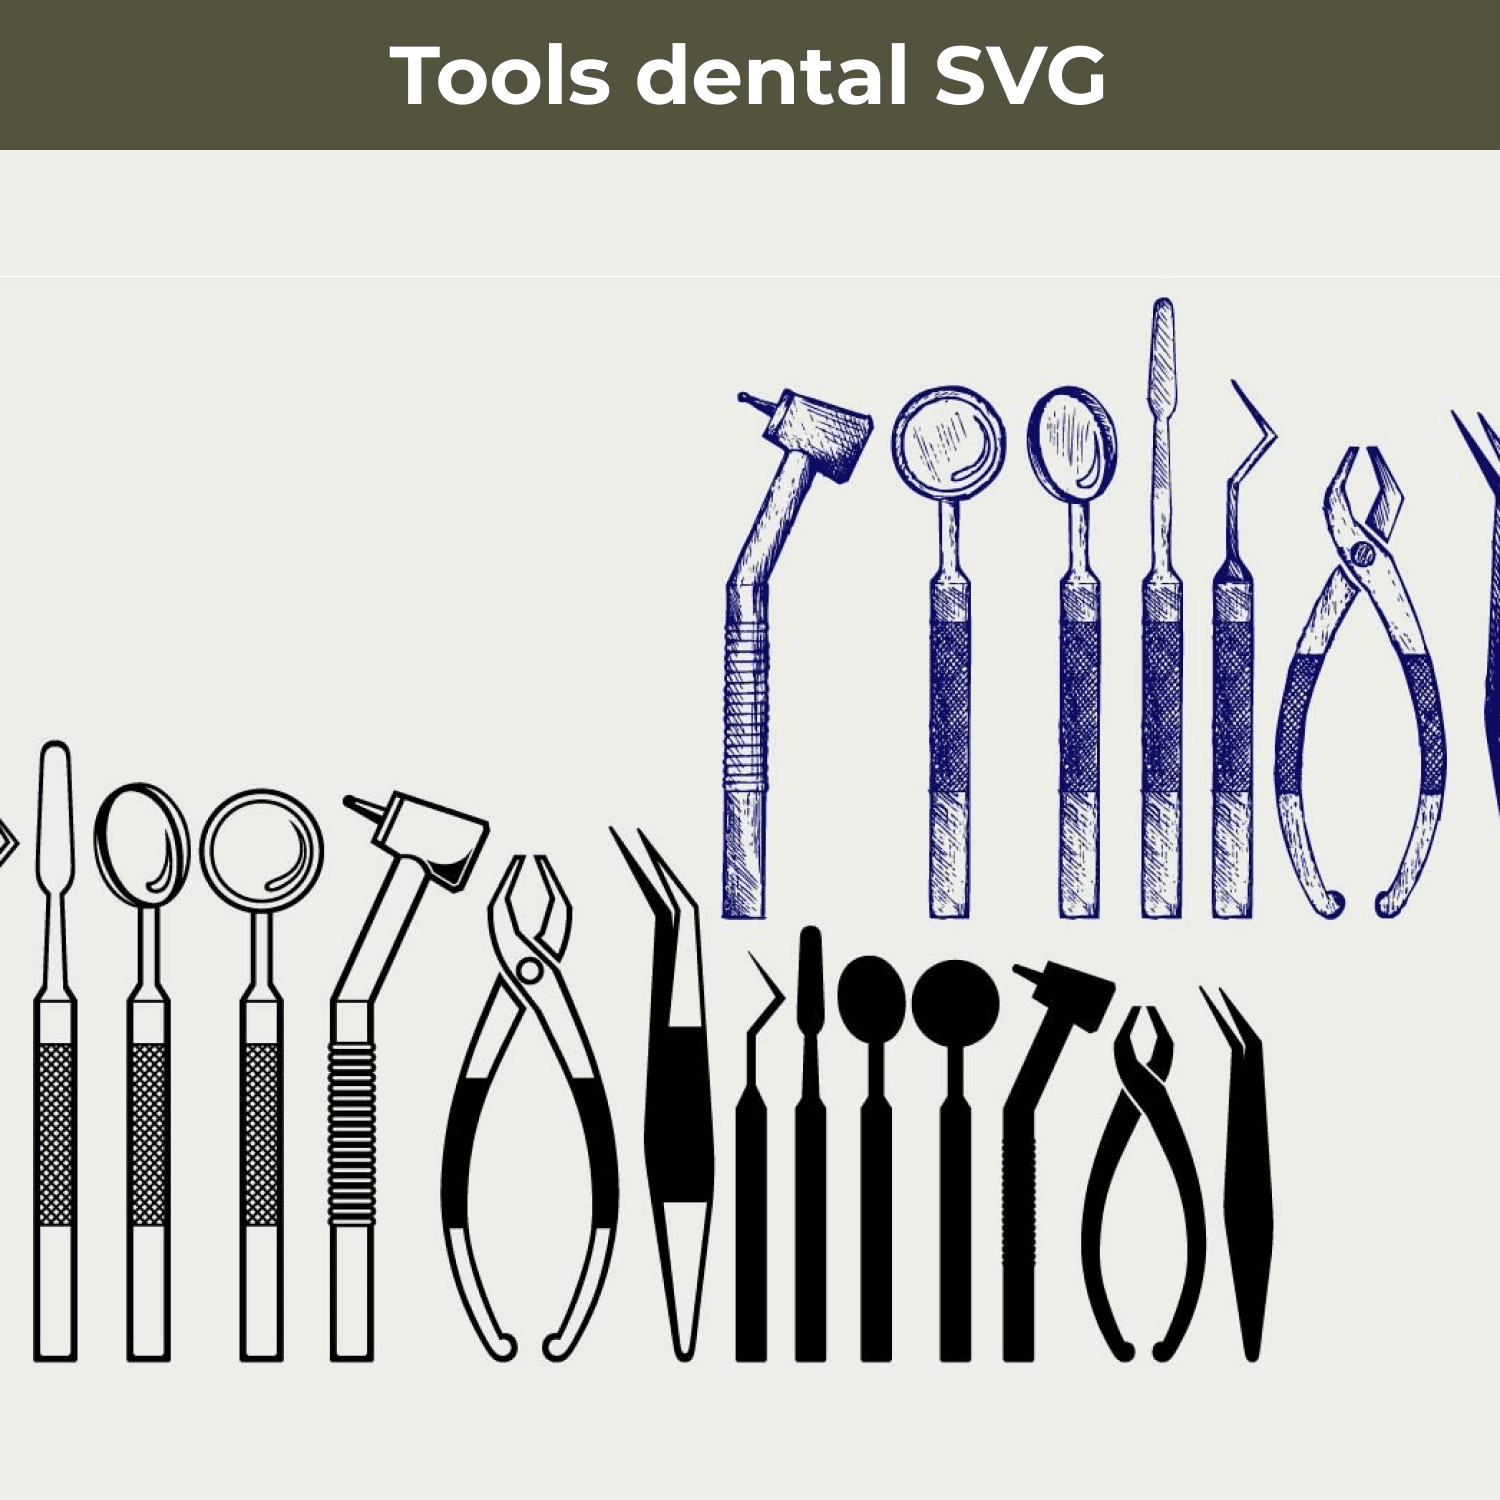 Tools dental SVG cover image.